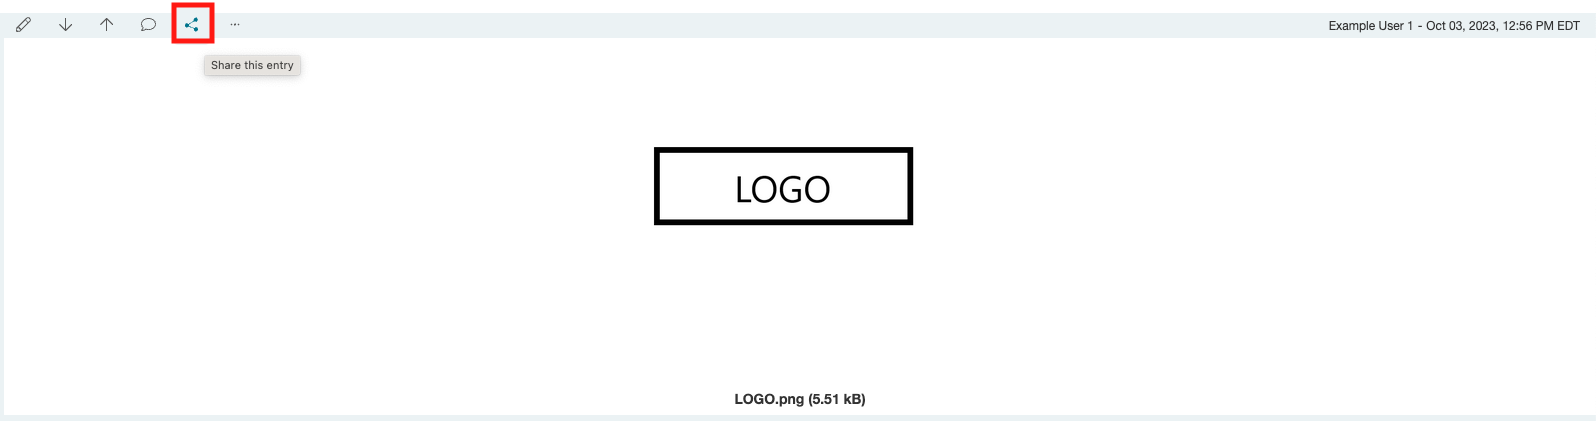 Inst_Logo_entry.png